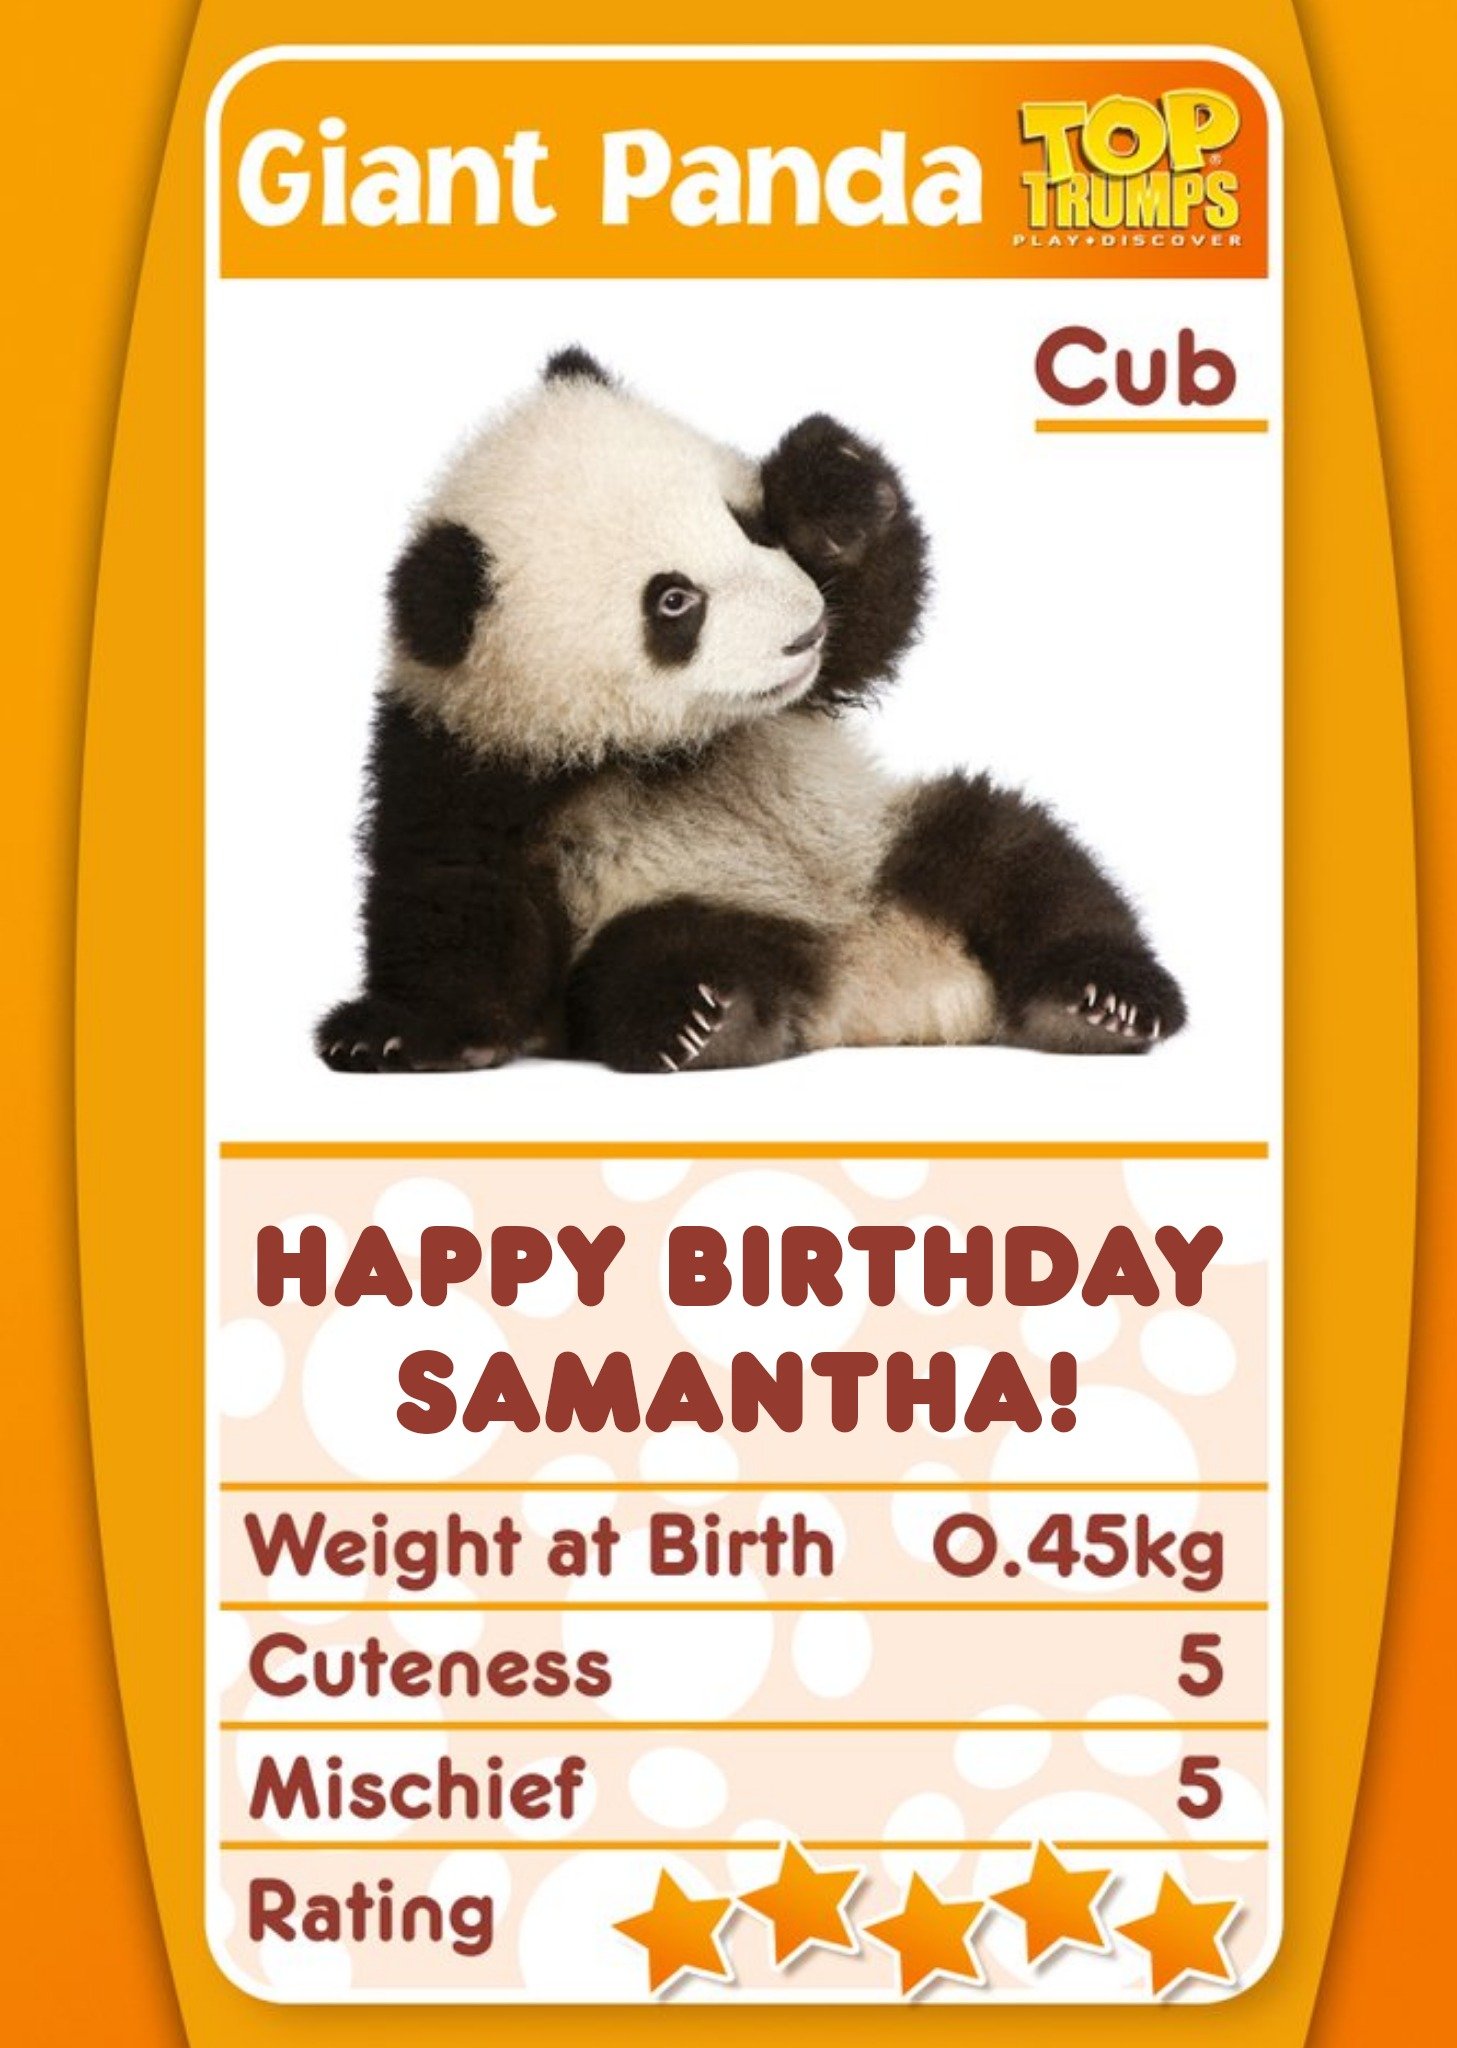 Other Top Trumps Panda Happy Birthday Card Ecard